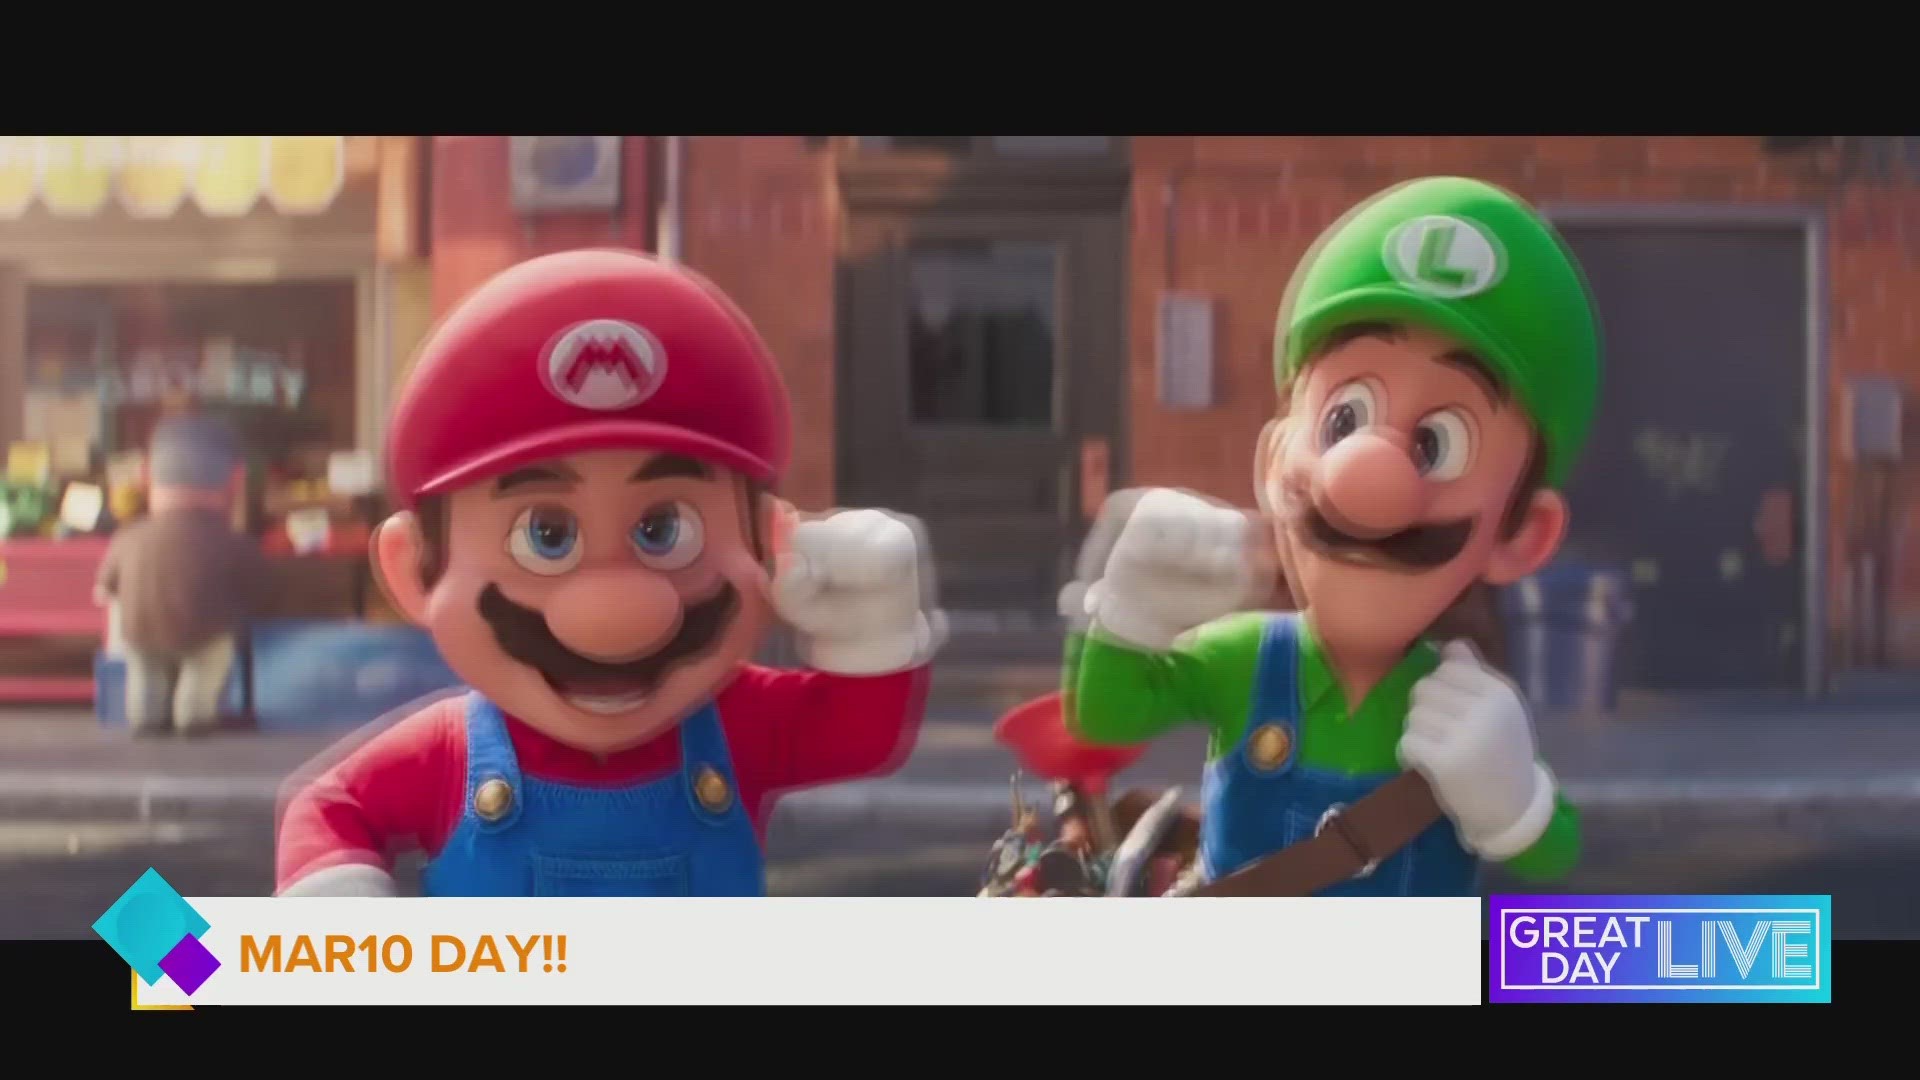 GDL celebrates Mar10 (Mario) Day